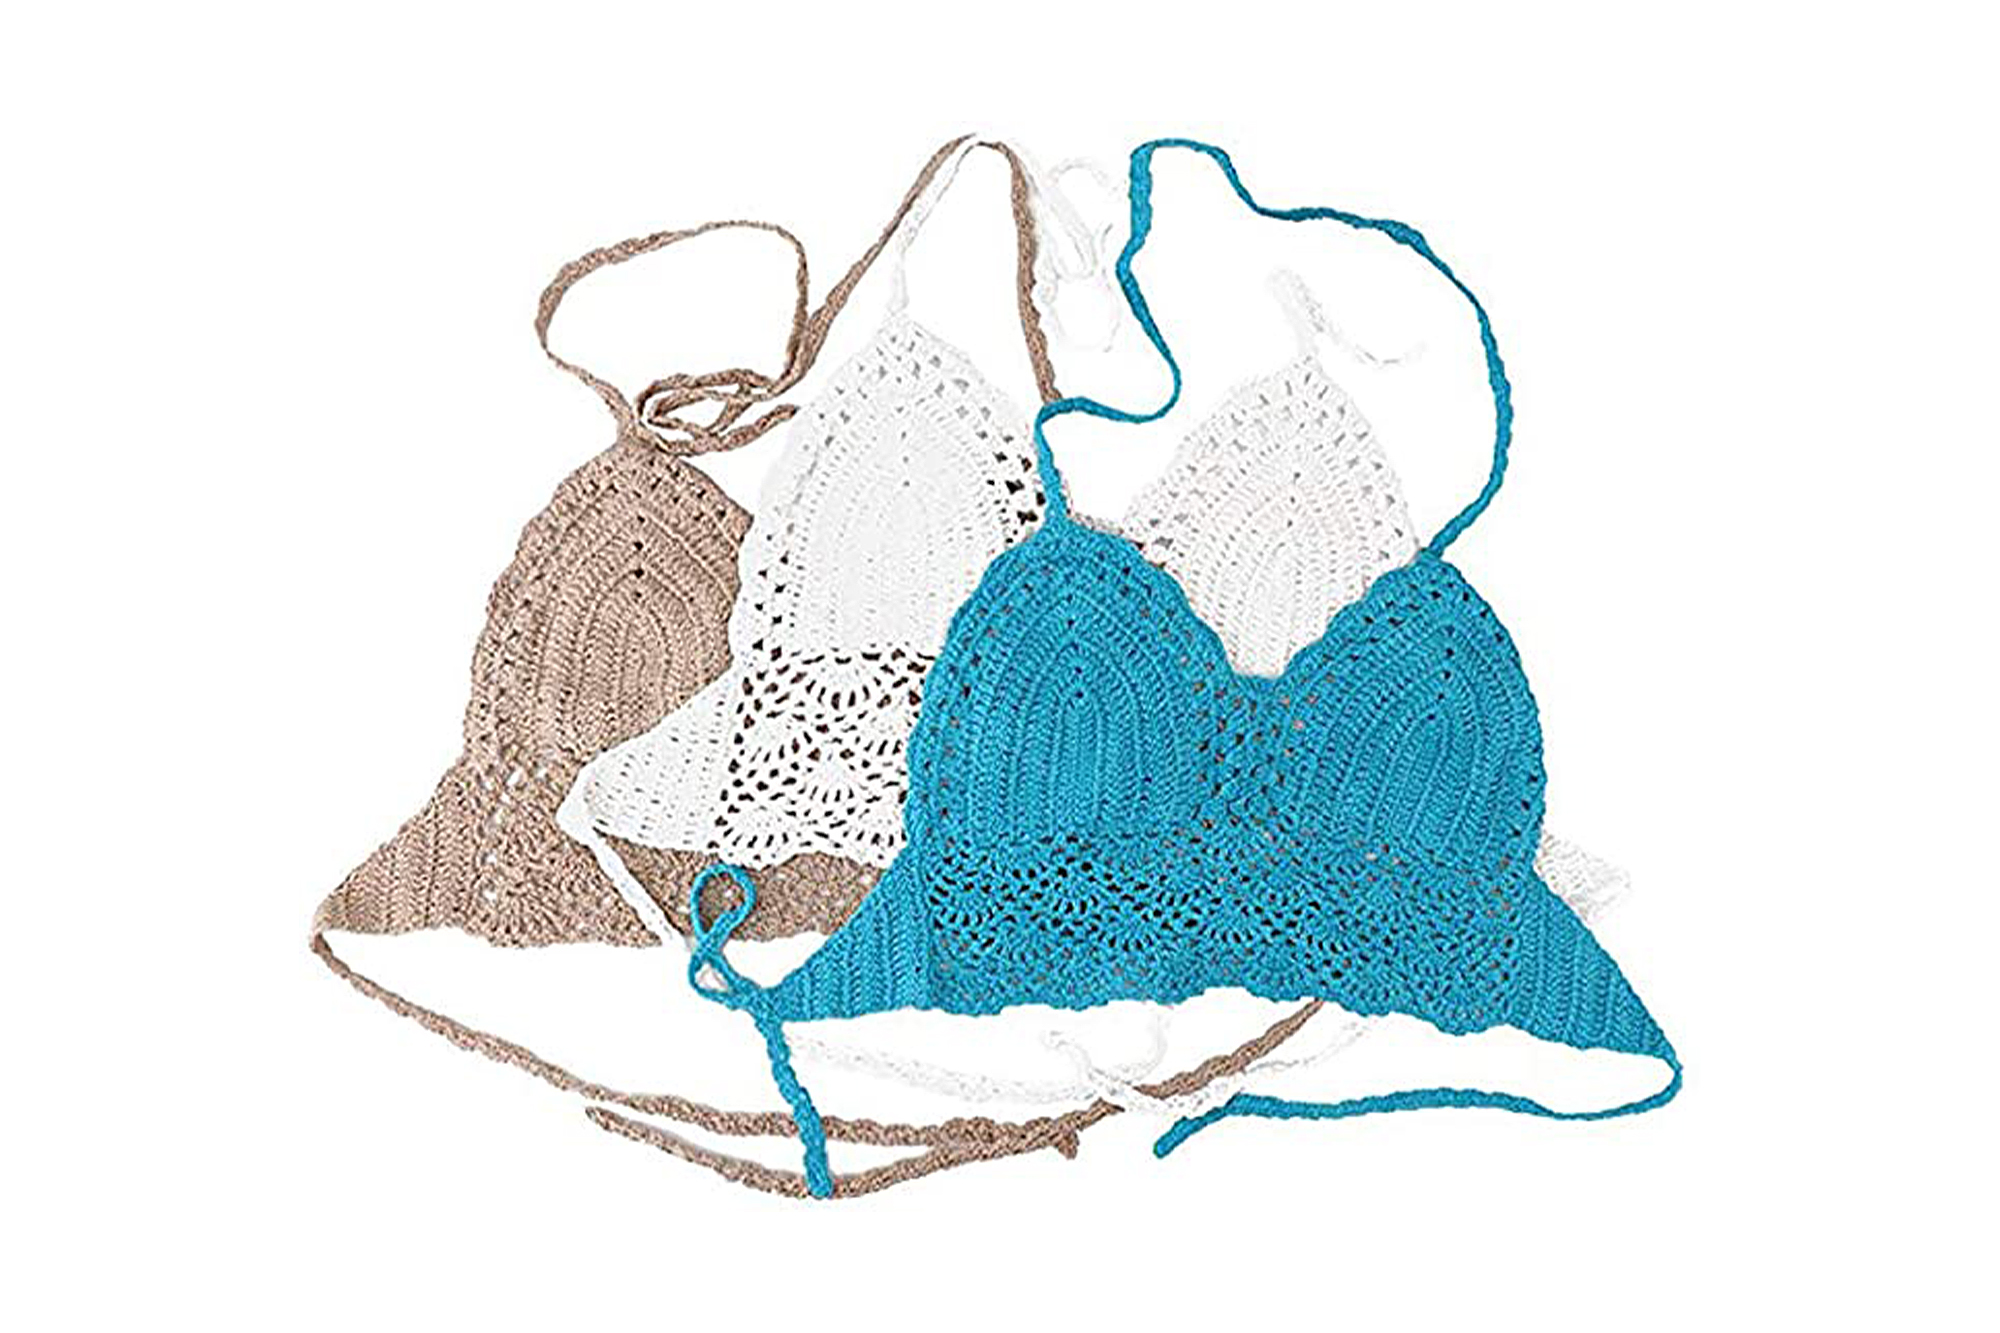  wonuu Women Summer Beach Crochet Top Bralette Knit Bra